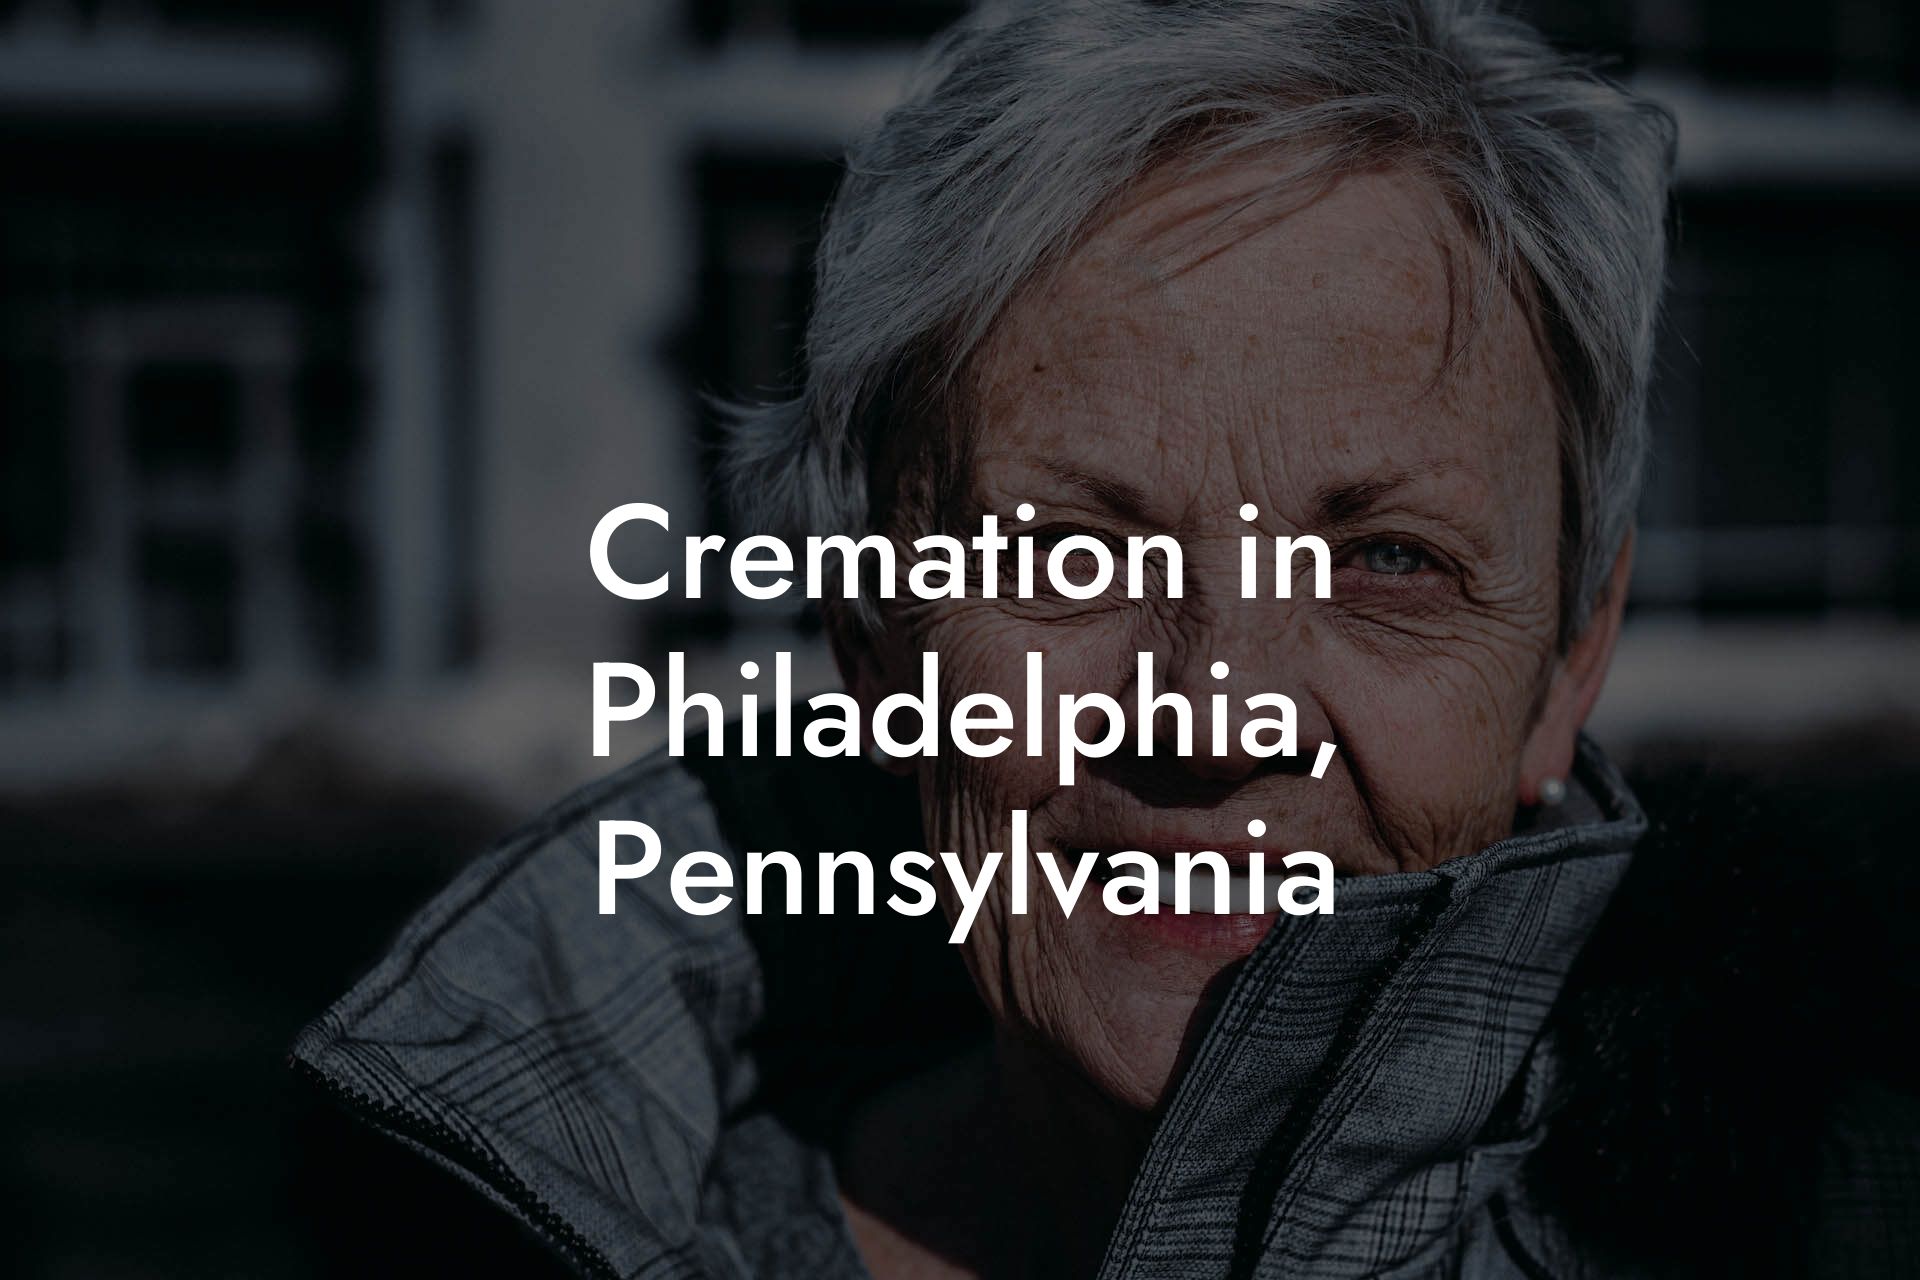 Cremation in Philadelphia, Pennsylvania